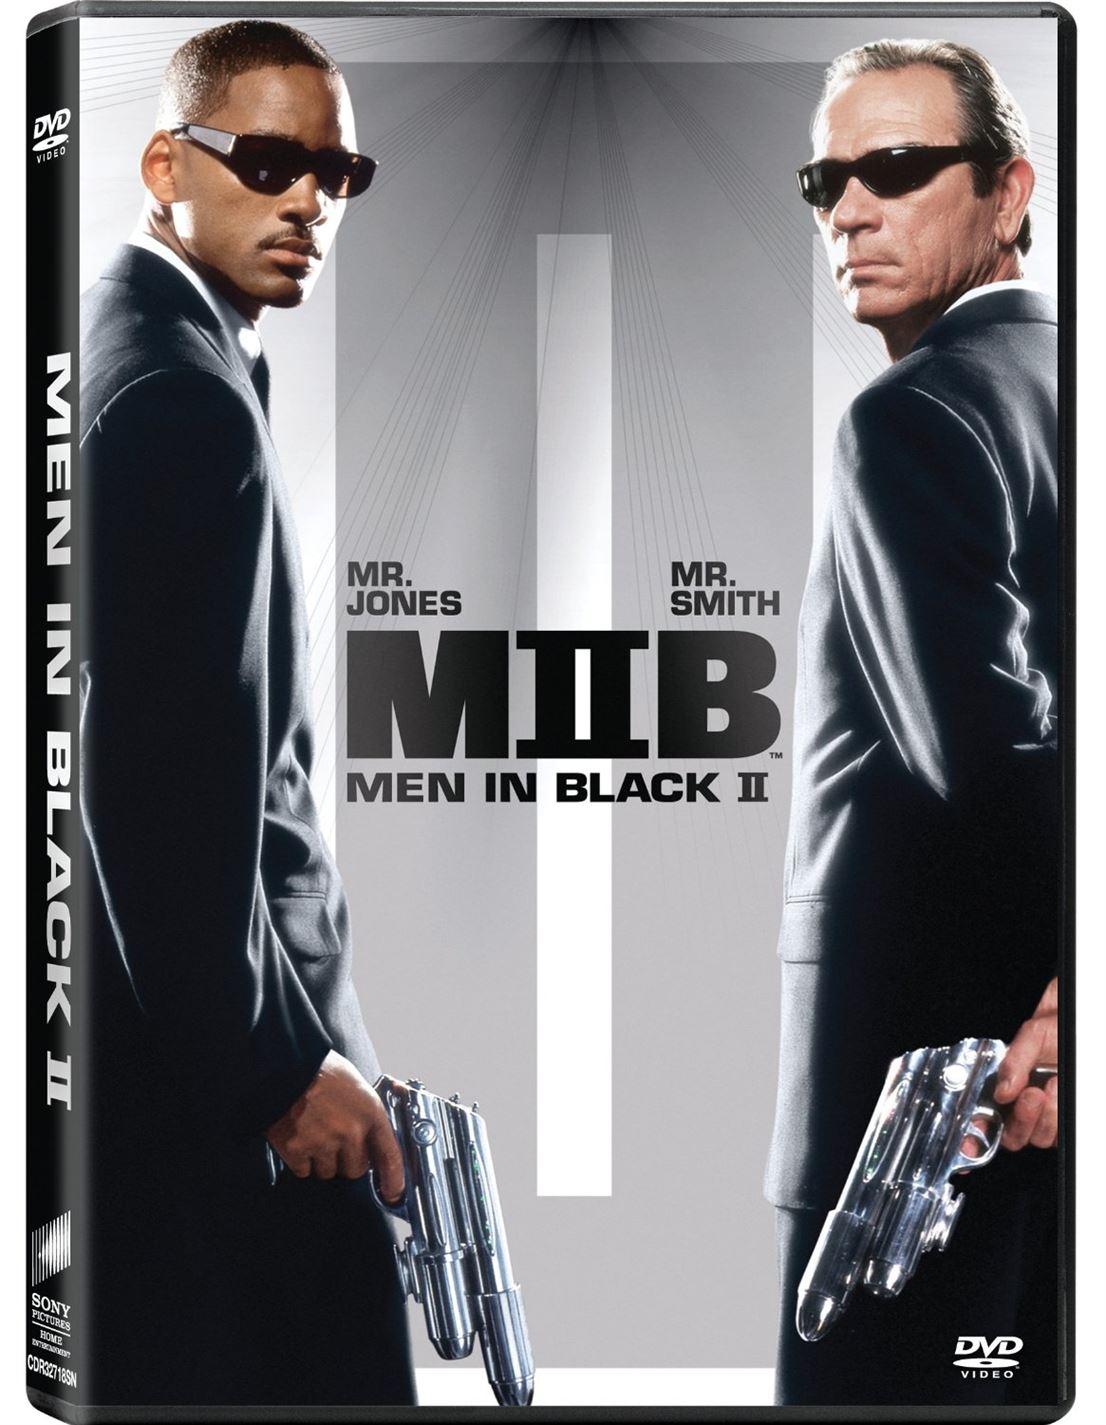 Men in Black II (DVD) - UK Seller NP